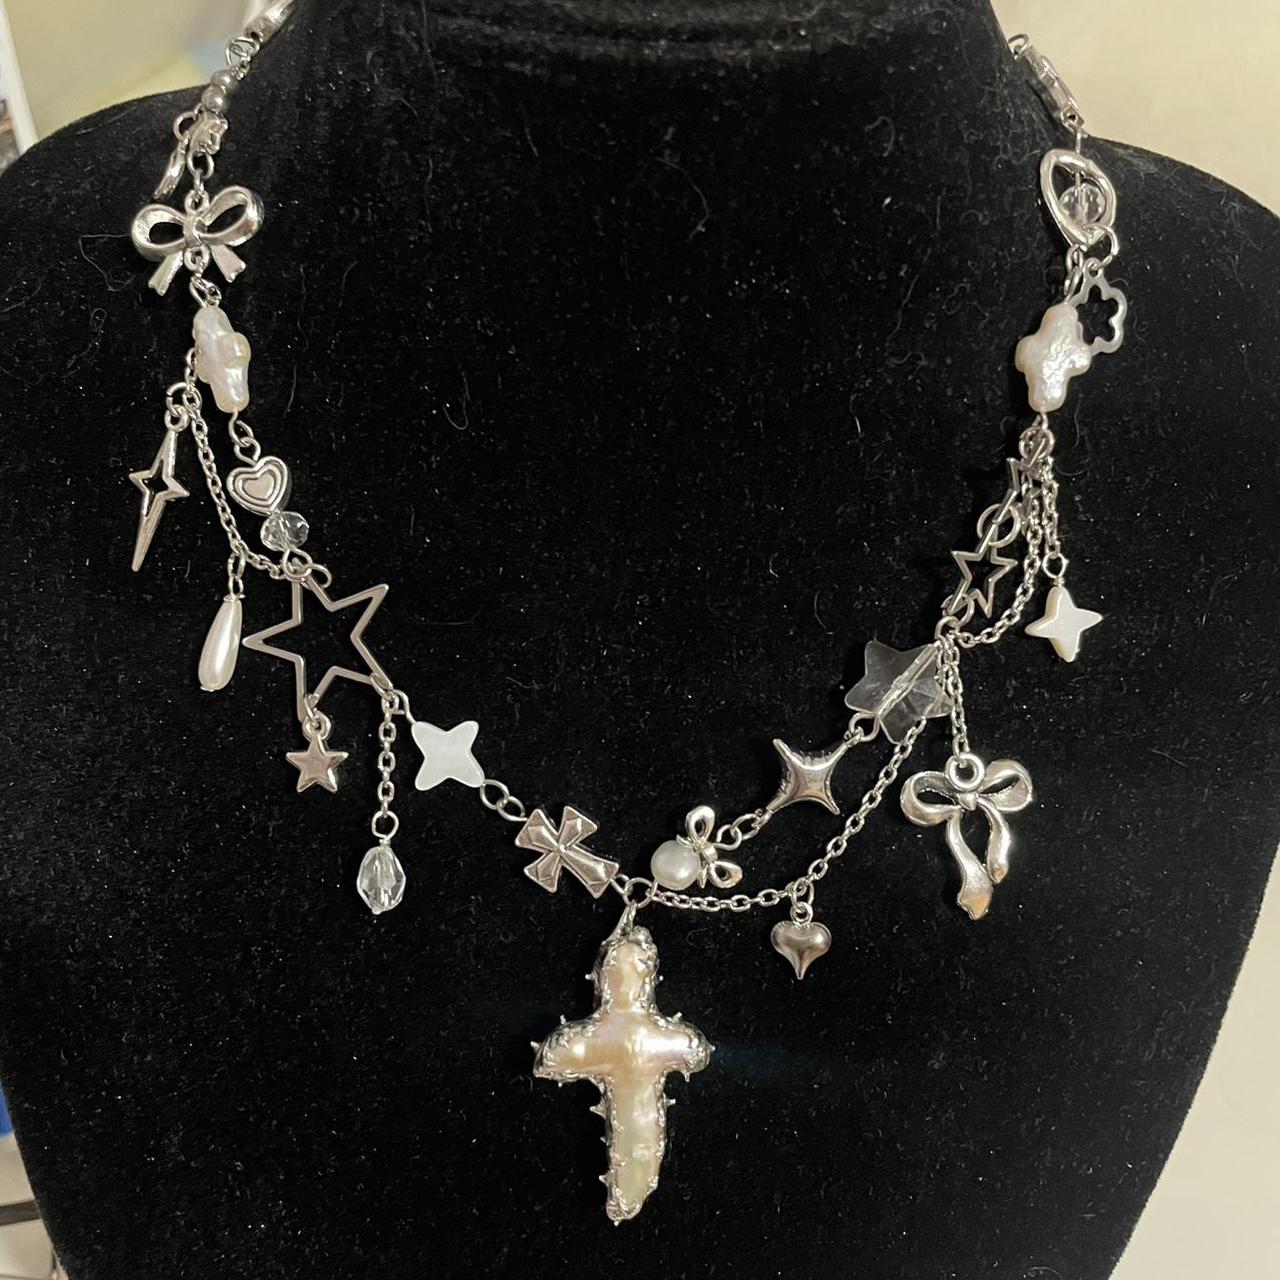 Cross pendant pearl necklace handmade by me 15-17 - Depop